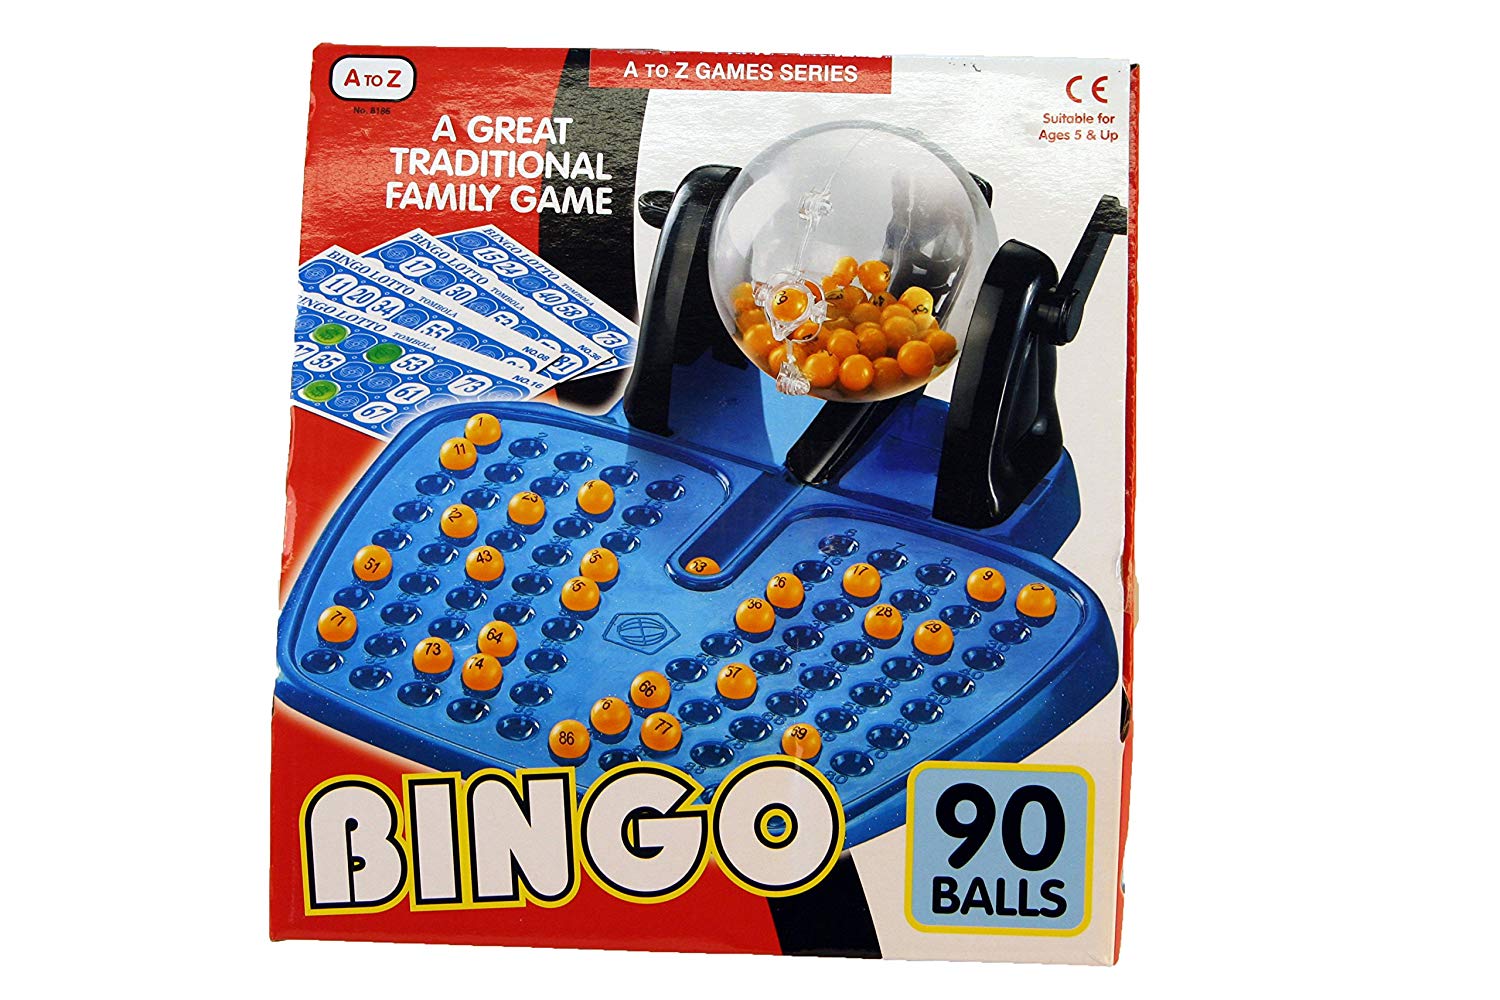 roleta de bingo online gr谩tis